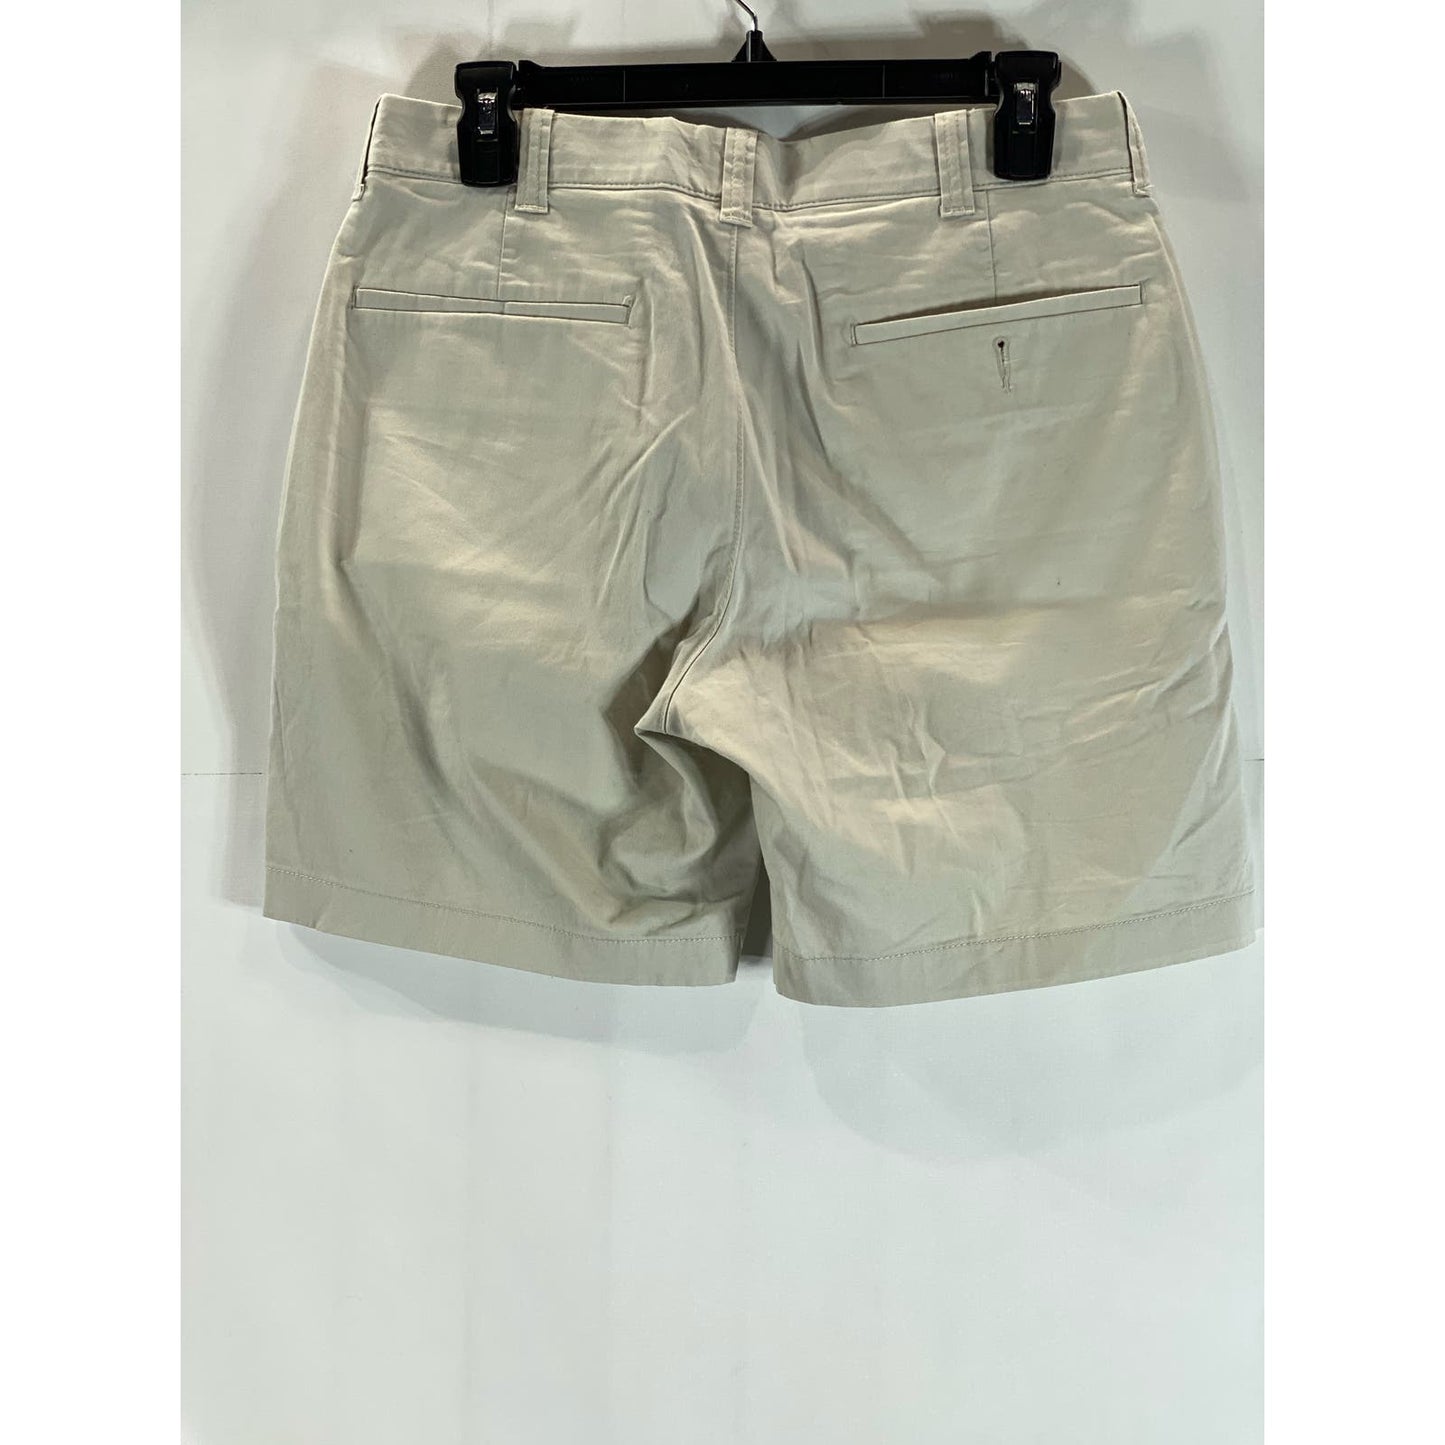 J. CREW Men's Tan Solid 7" Stretch Chino Shorts SZ 29